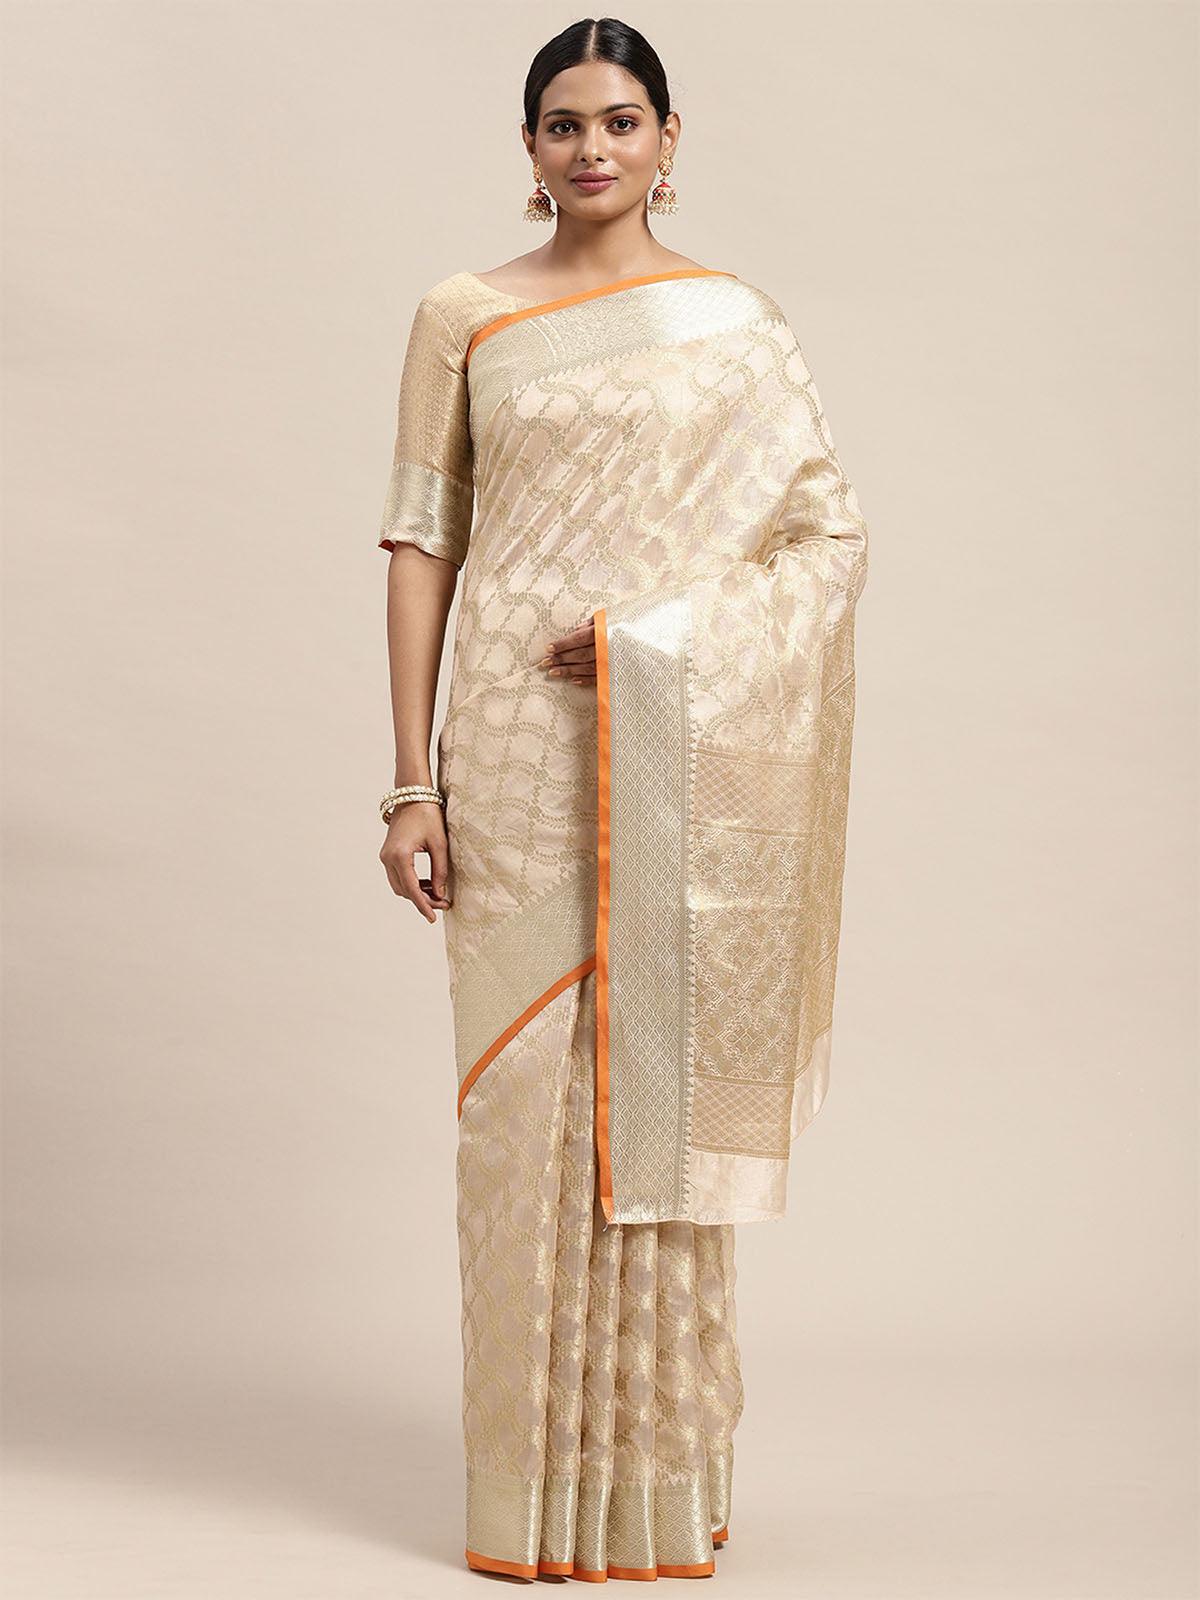 Stunning Ethnic Wear Saree Designs -Storyvogue.com | Cotton saree designs, Saree  designs, Indian fashion saree